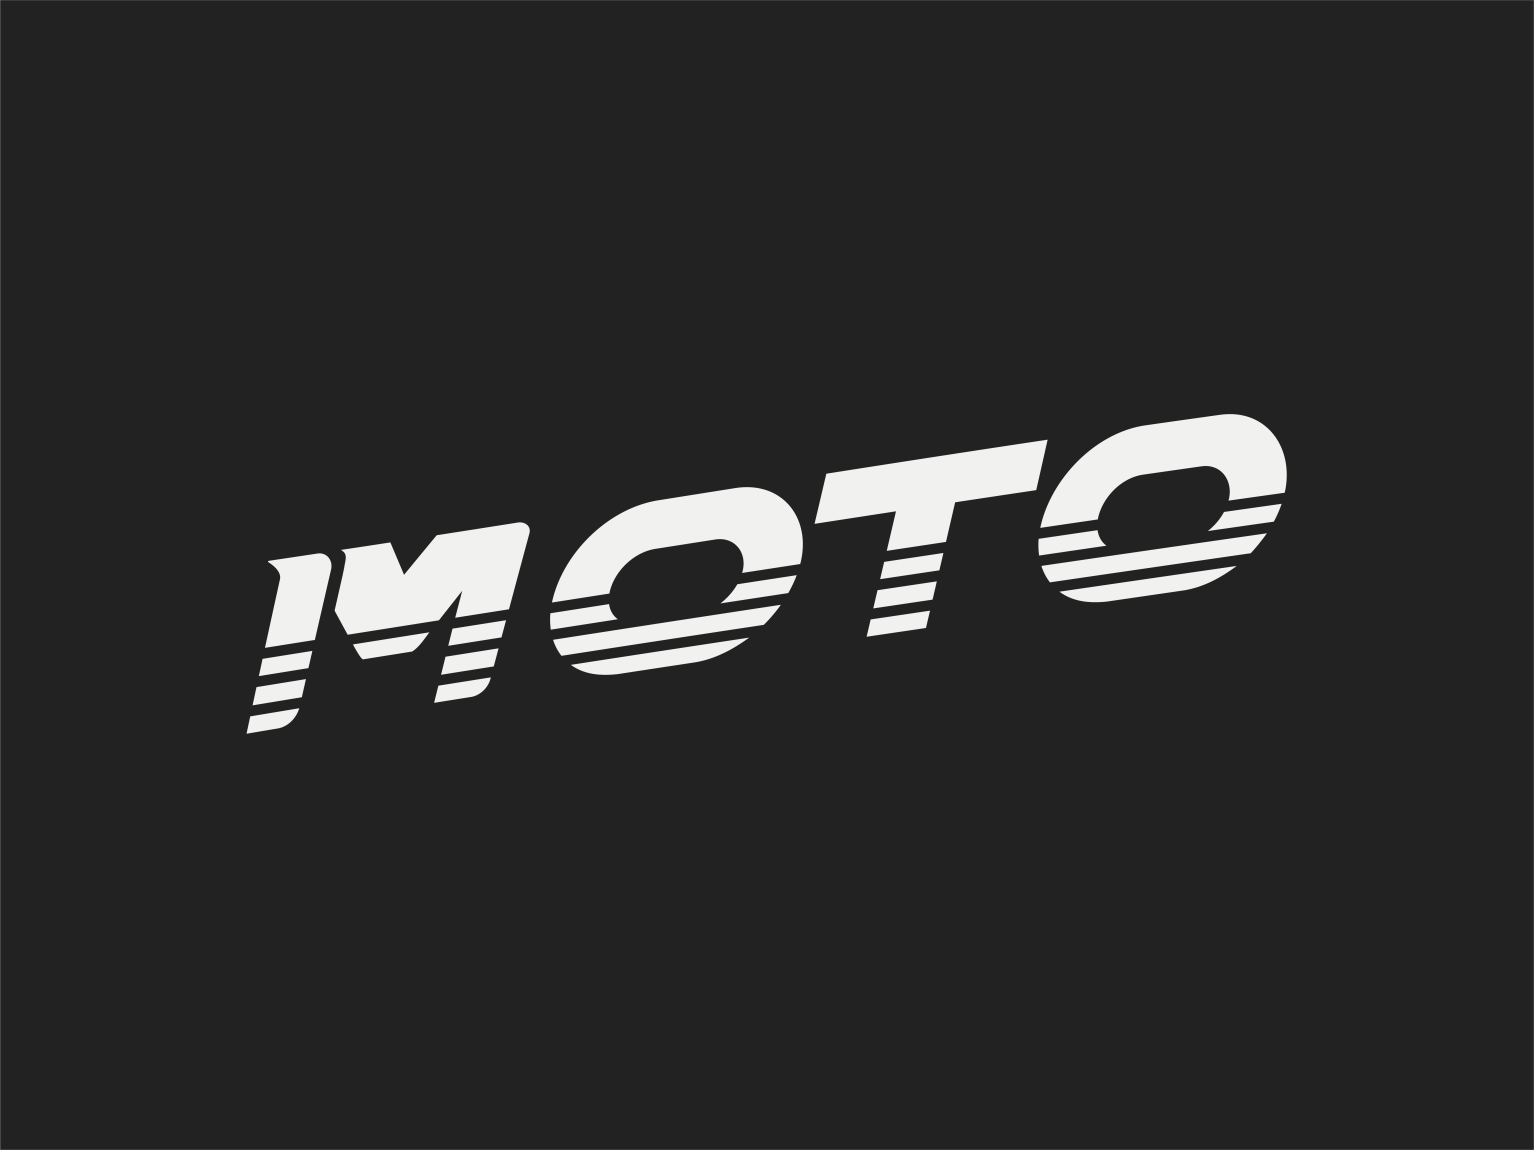 IMoto Logo by Jon Robinson on Dribbble